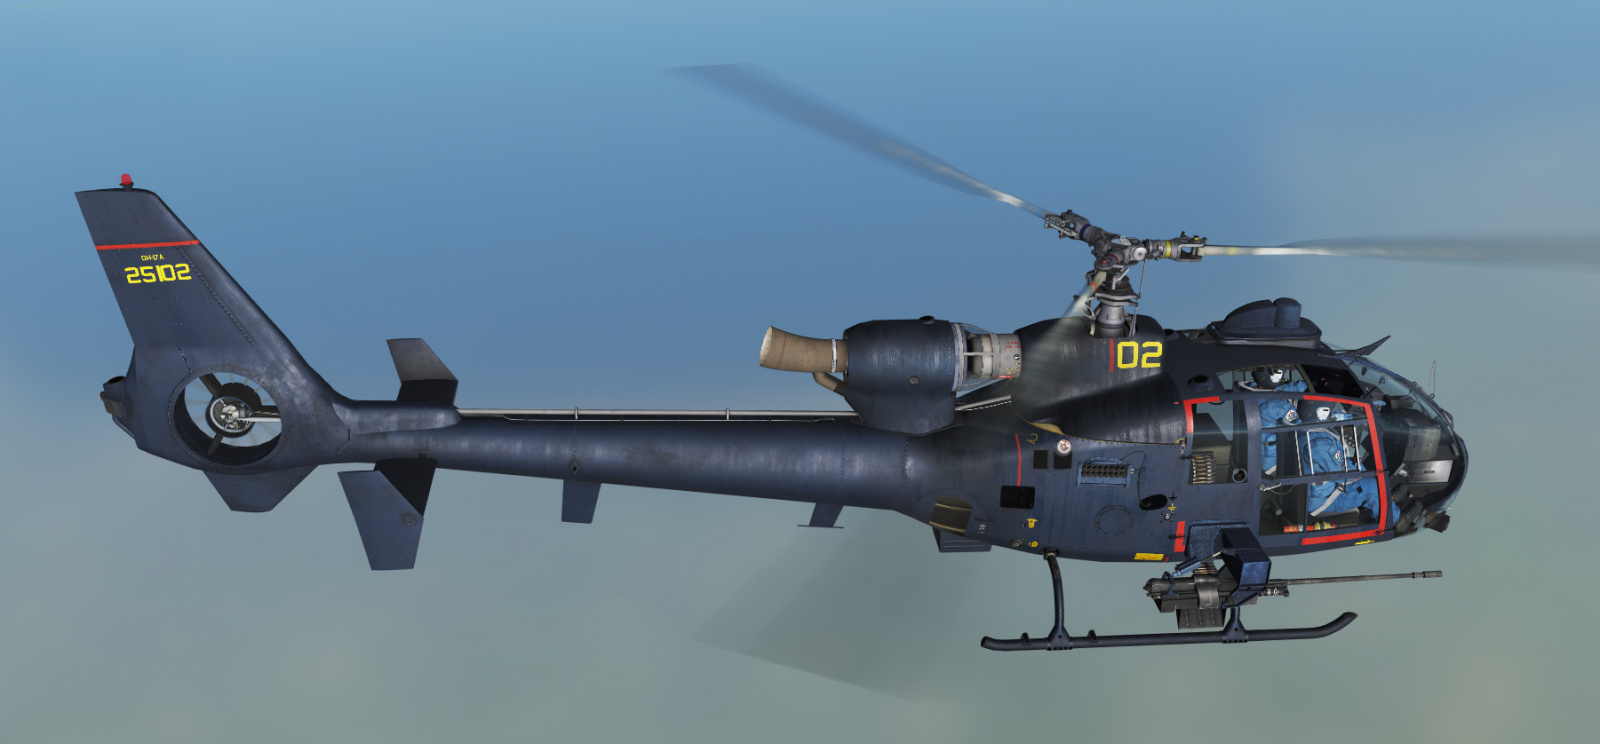 OH-17A Blue Thunder Skin for the SA342 Gazelle